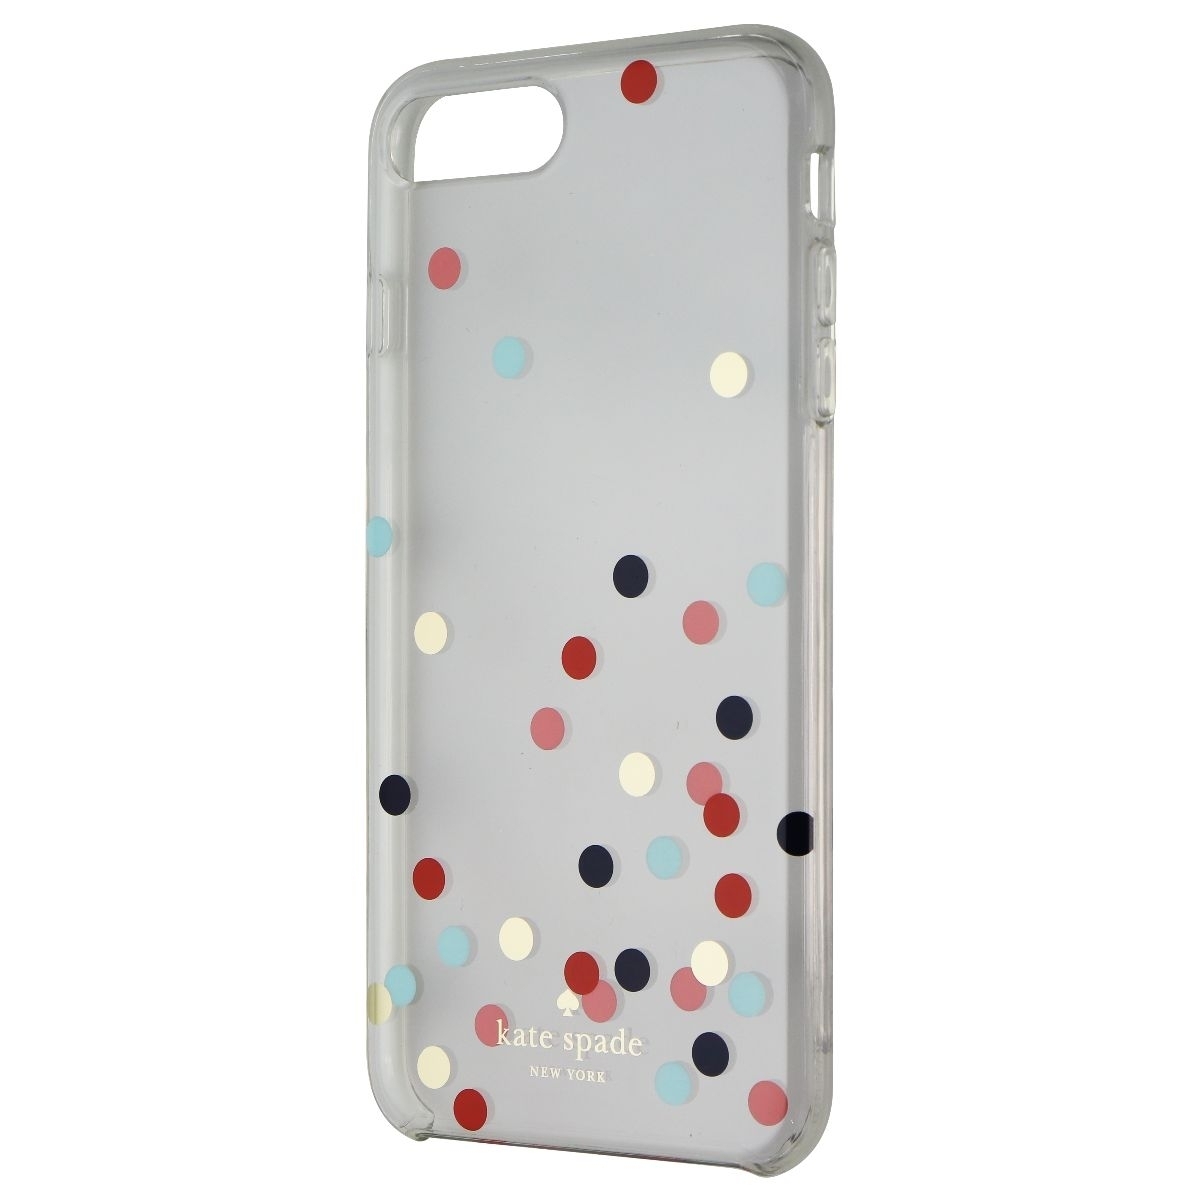 Kate Spade Protective Hardshell Case For IPhone 8 Plus/7 Plus - Multi Confetti (Refurbished)